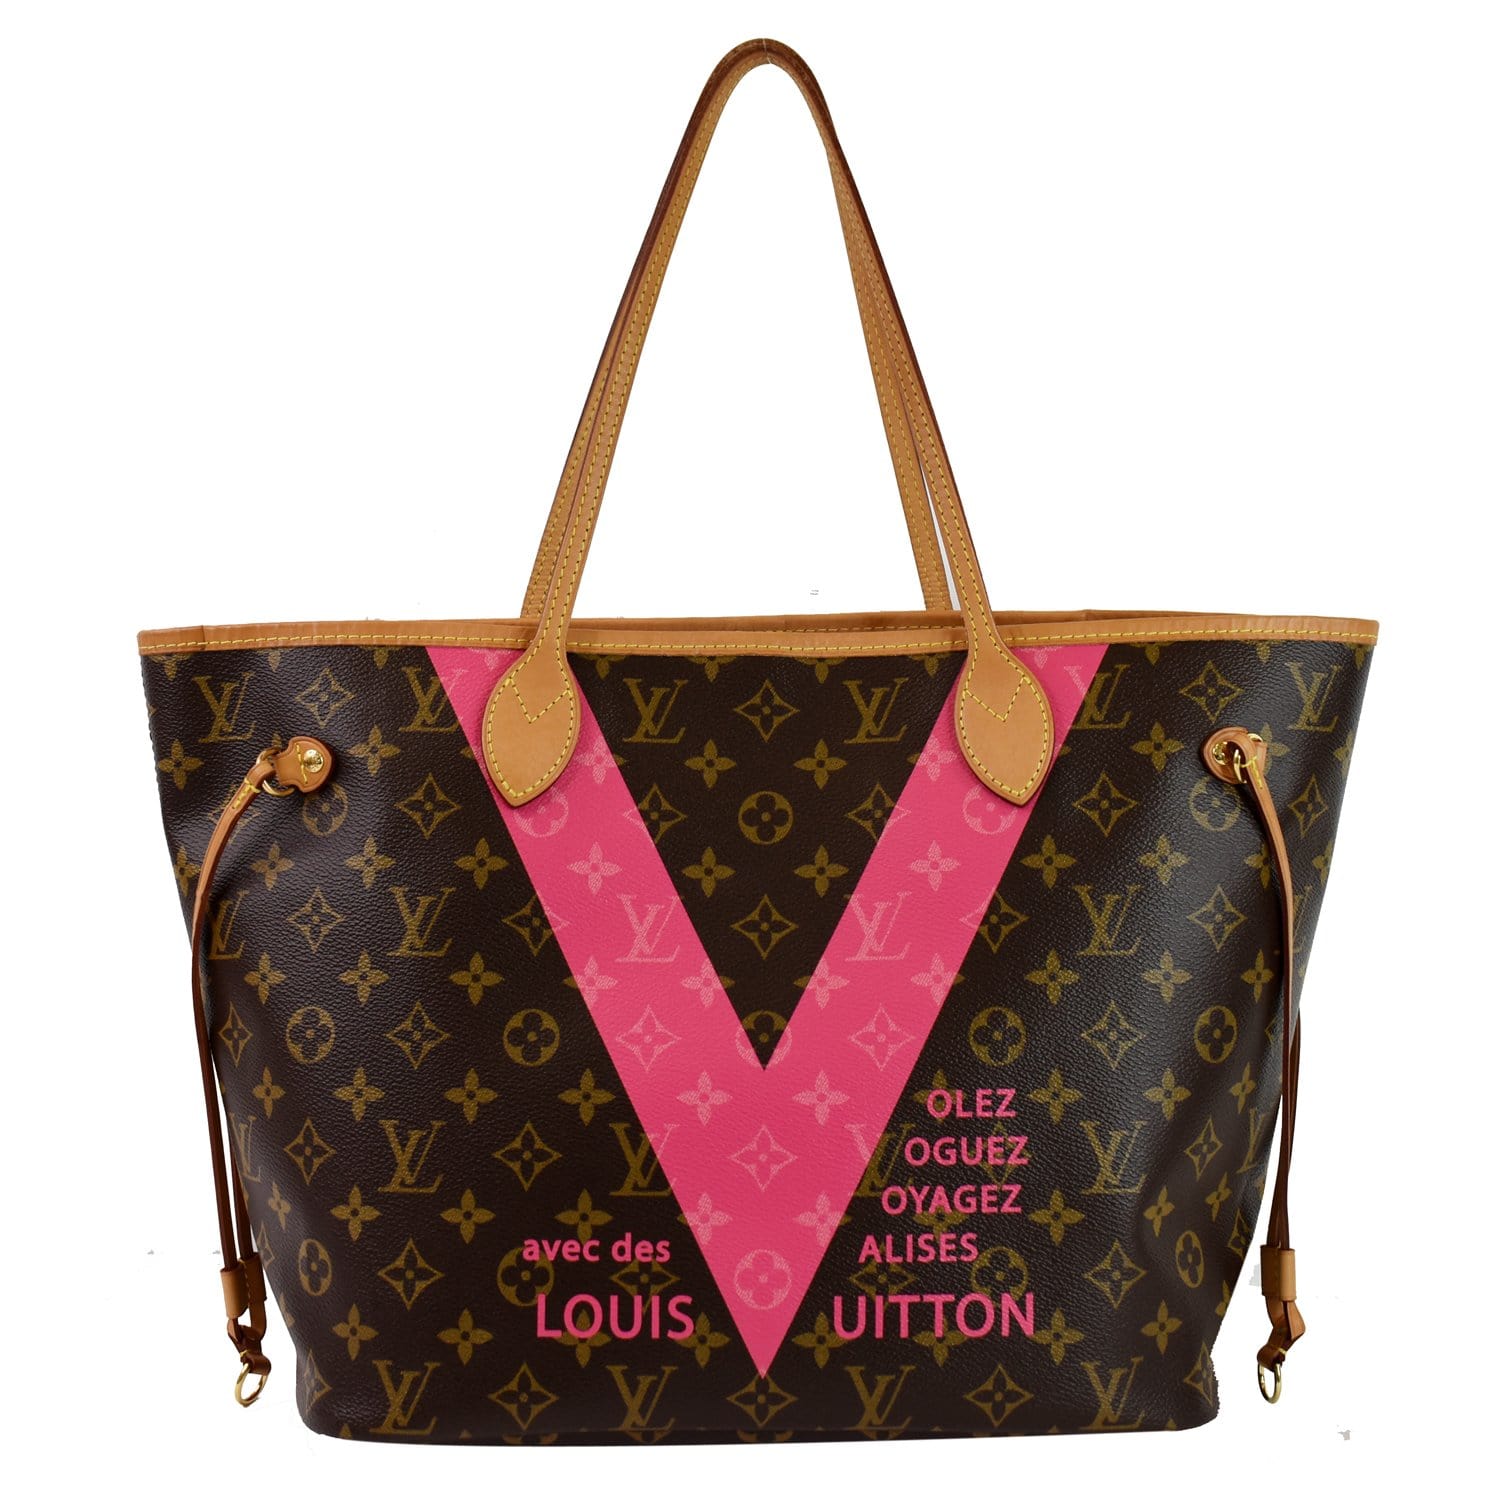 Louis Vuitton 😍 obsessed! #neverfullbb #louisvuittonbag